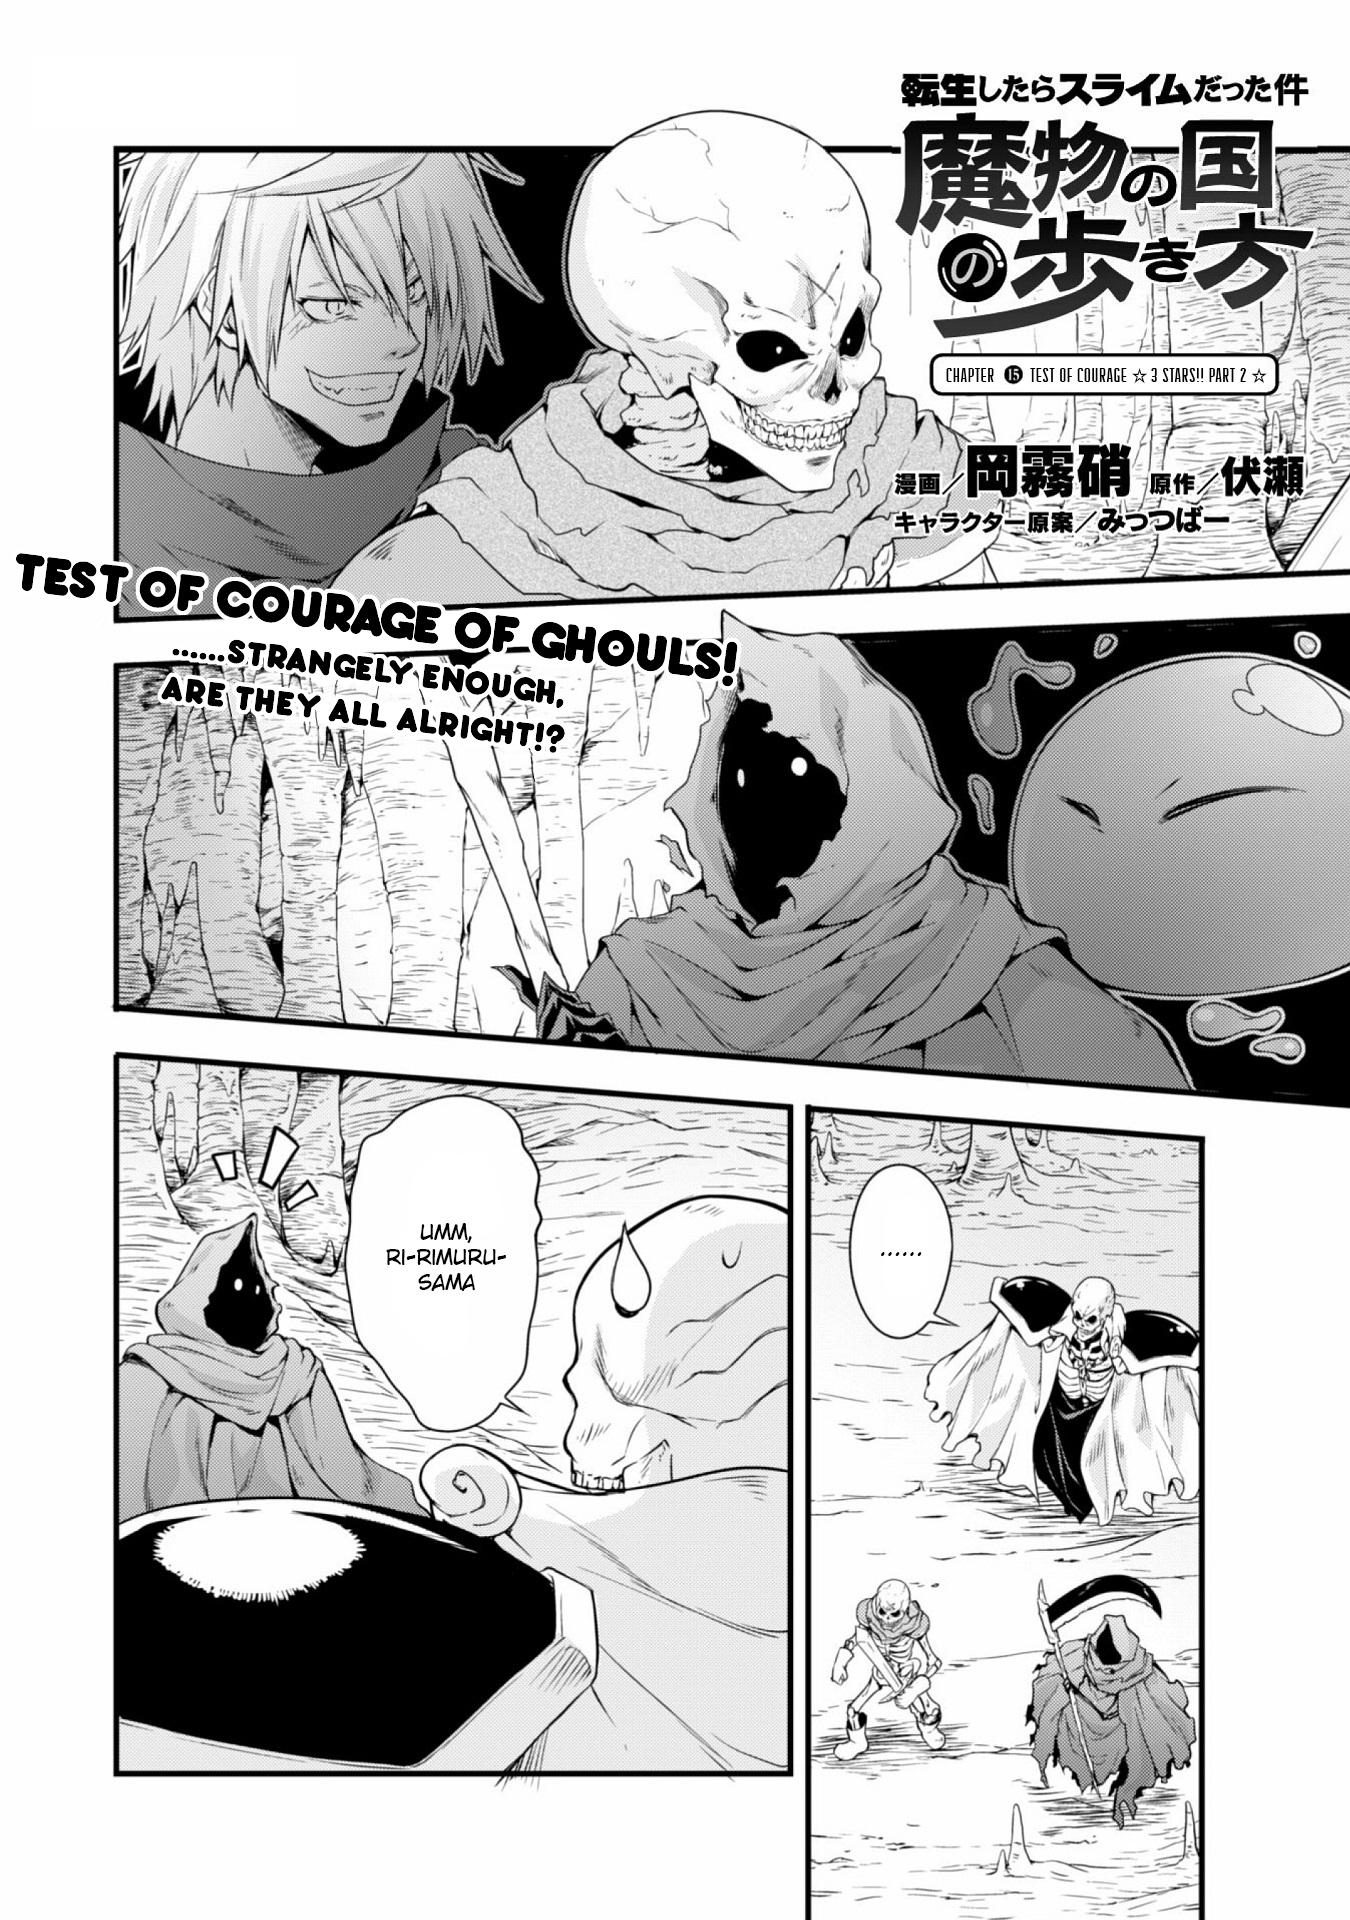 Tensei Shitara Slime Datta Ken: Tempest No Arukikata Vol.2 Chapter 15: Test Of Courage ☆ 3 Stars!! Part 2 ☆ - Picture 2